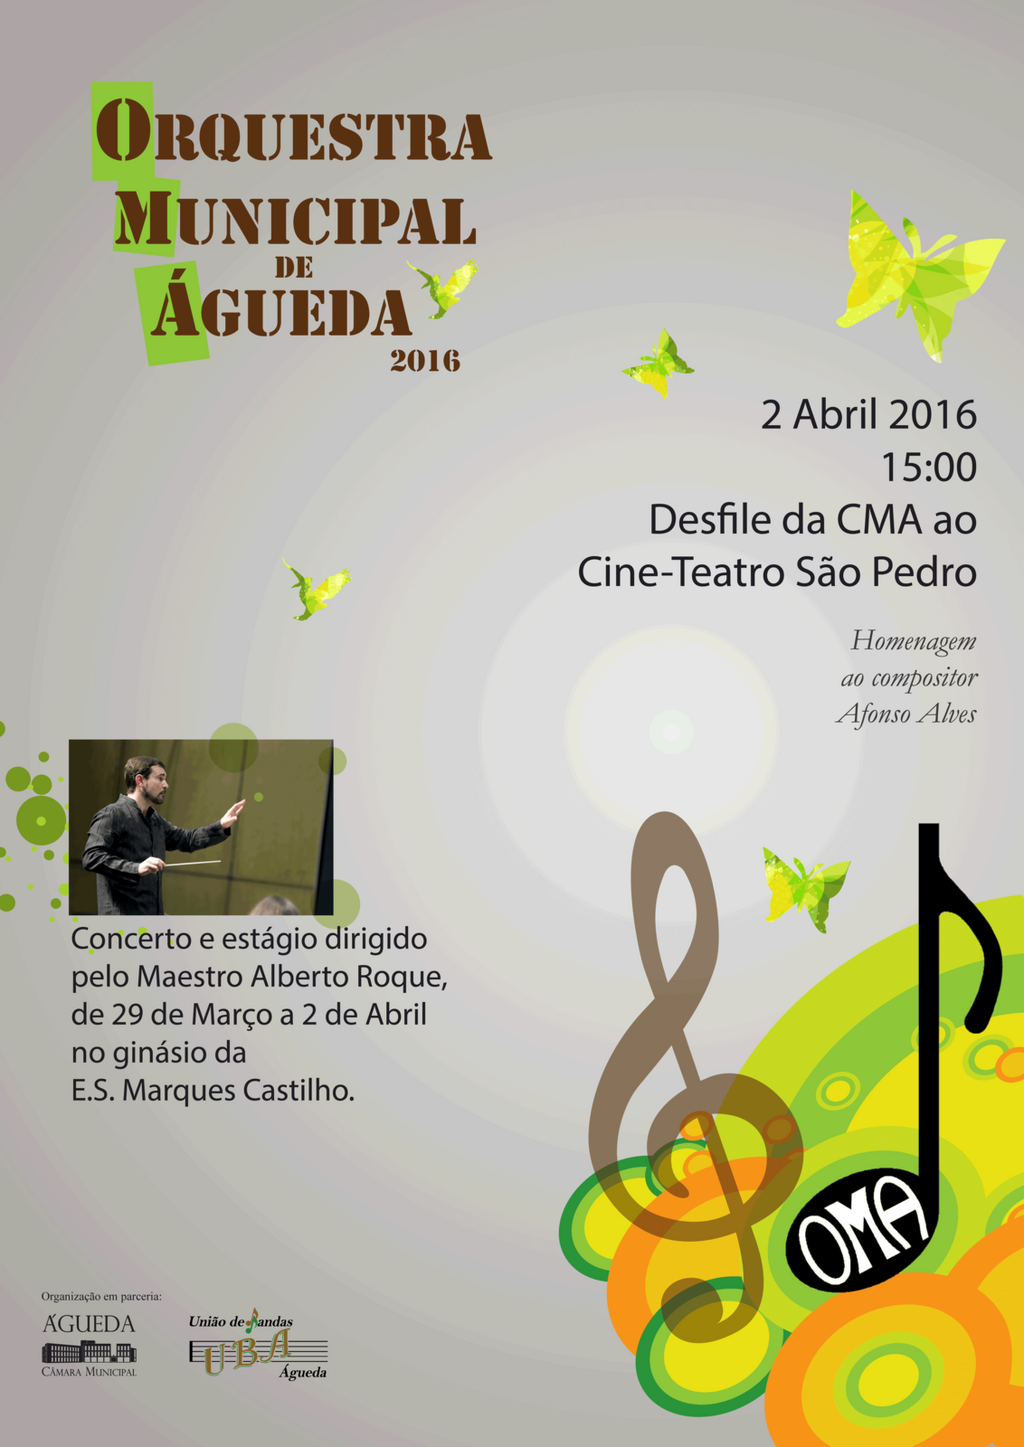 Orquestra Municipal de Águeda 2016